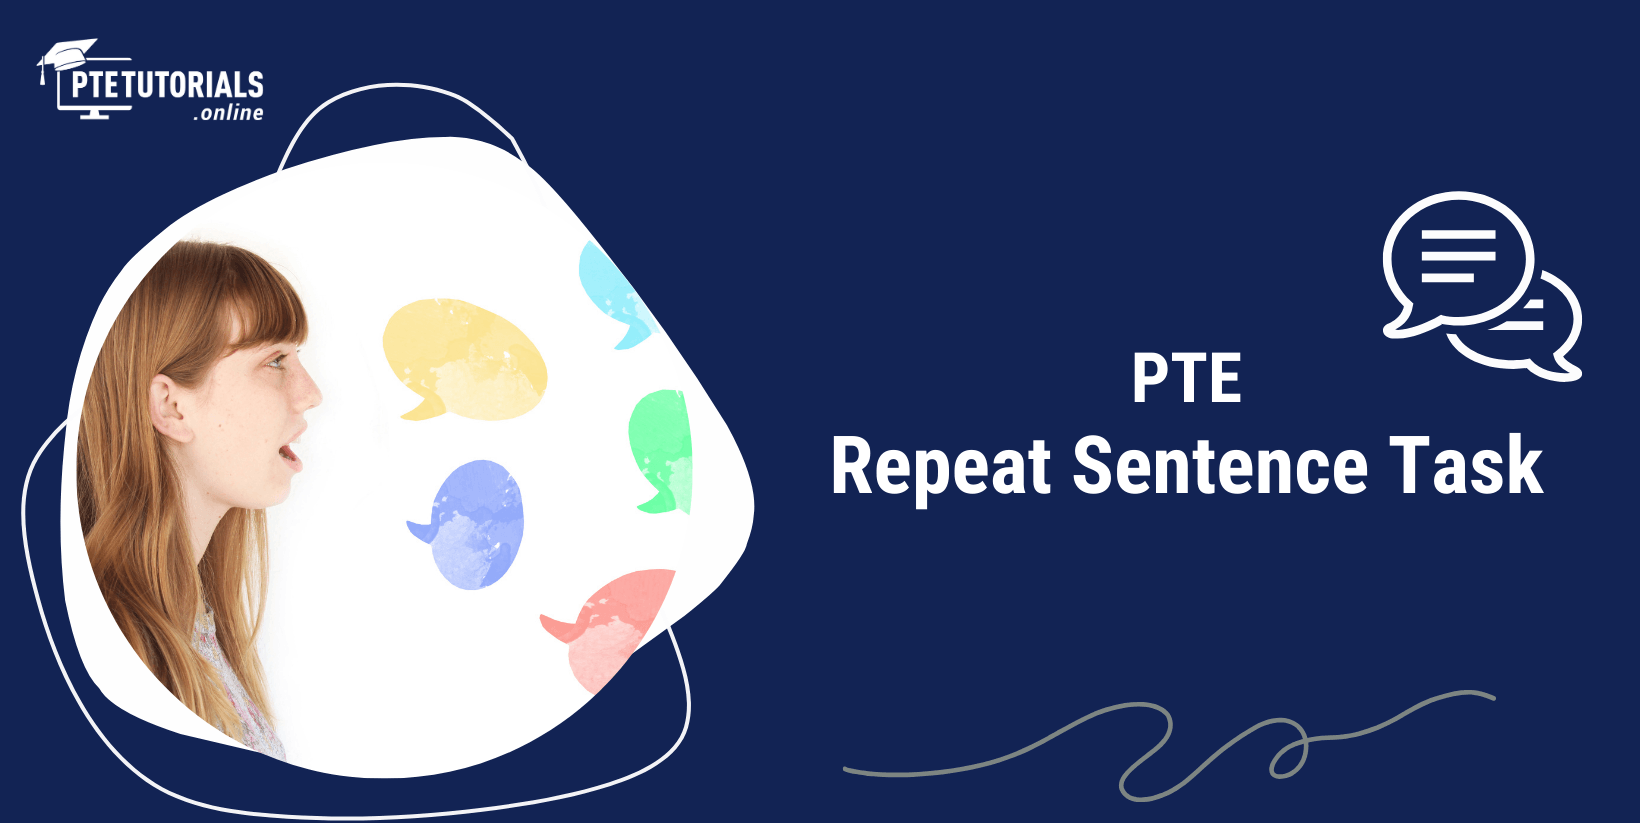 PTE Repeat Sentence Task